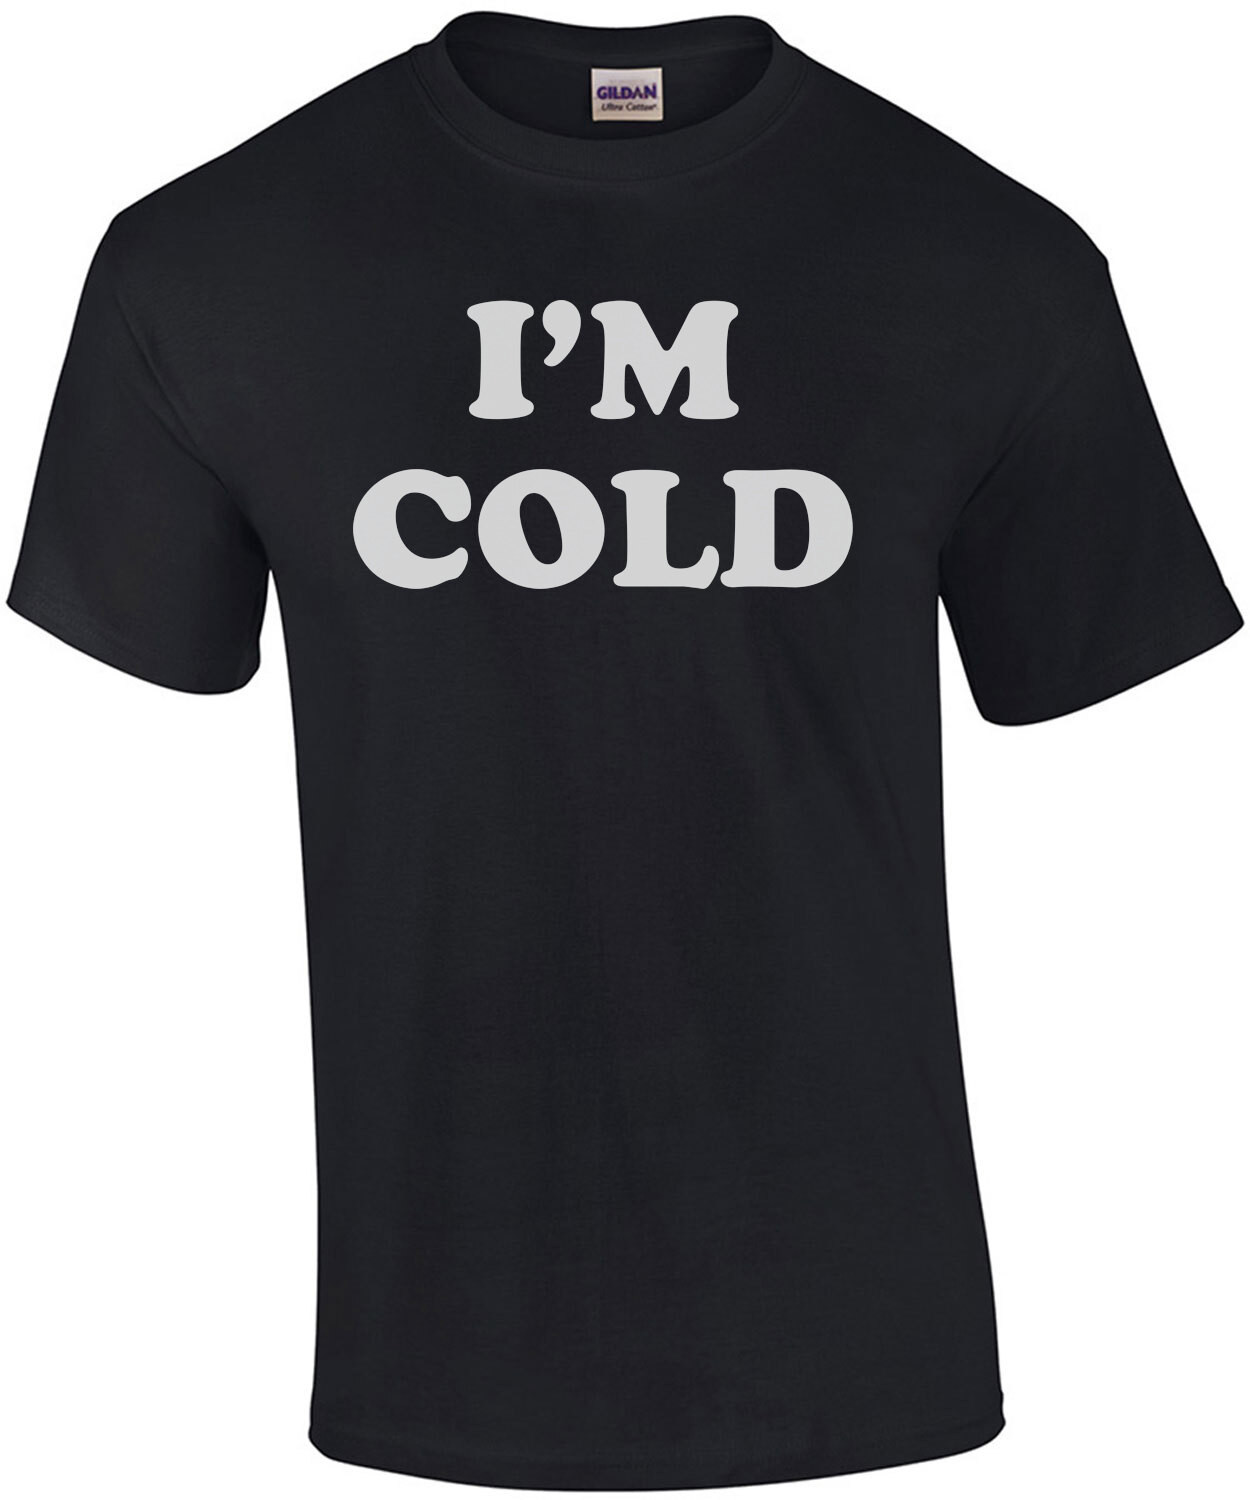 I'M COLD - Funny Ladies T-Shirt